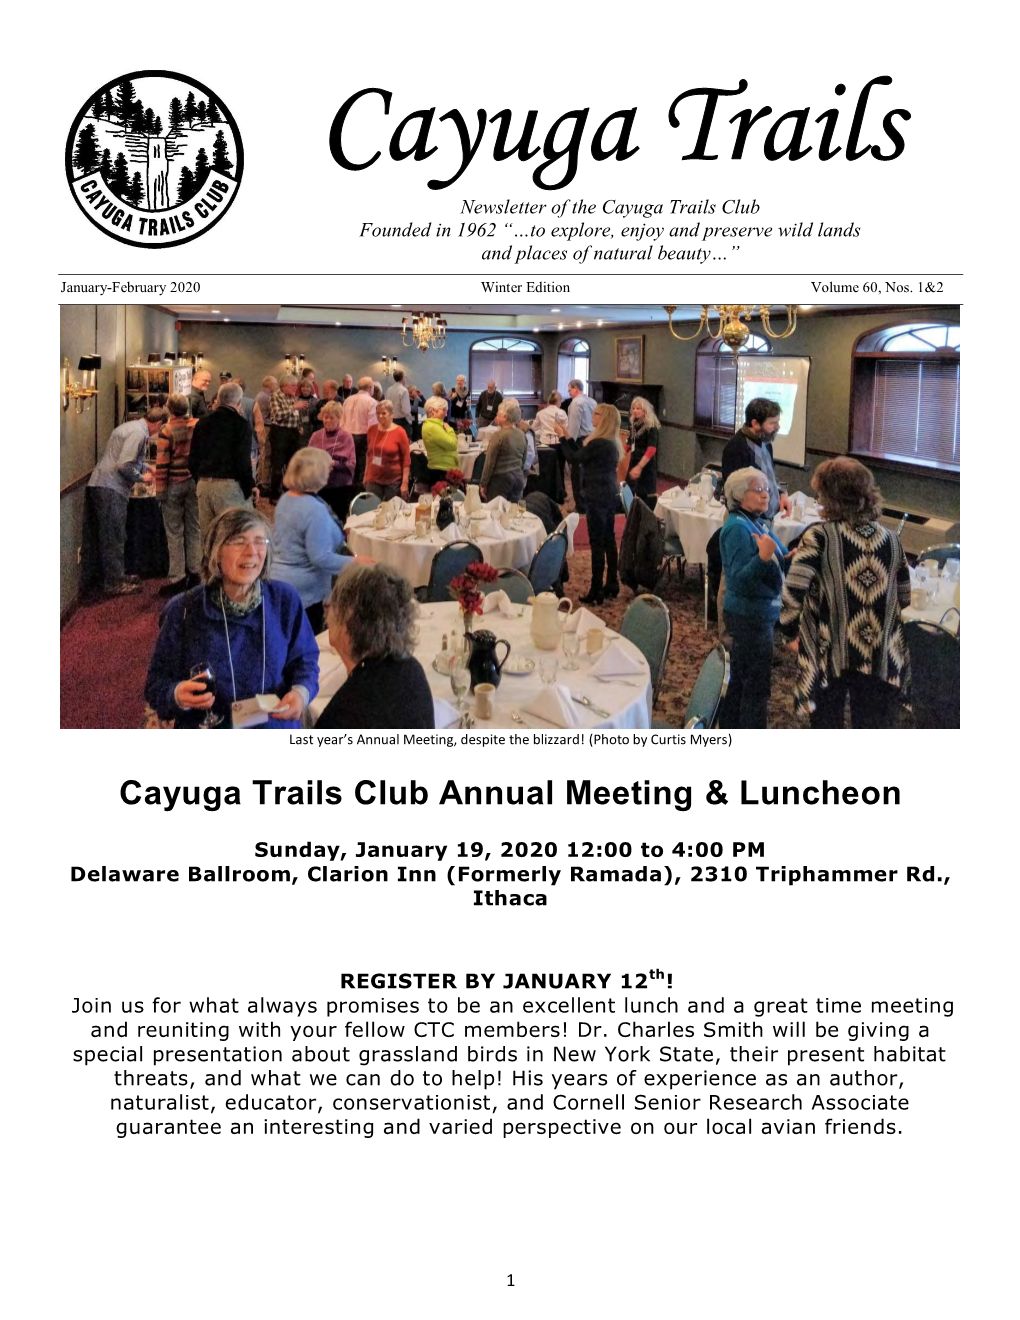 Cayuga Trails Club Annual Meeting & Luncheon